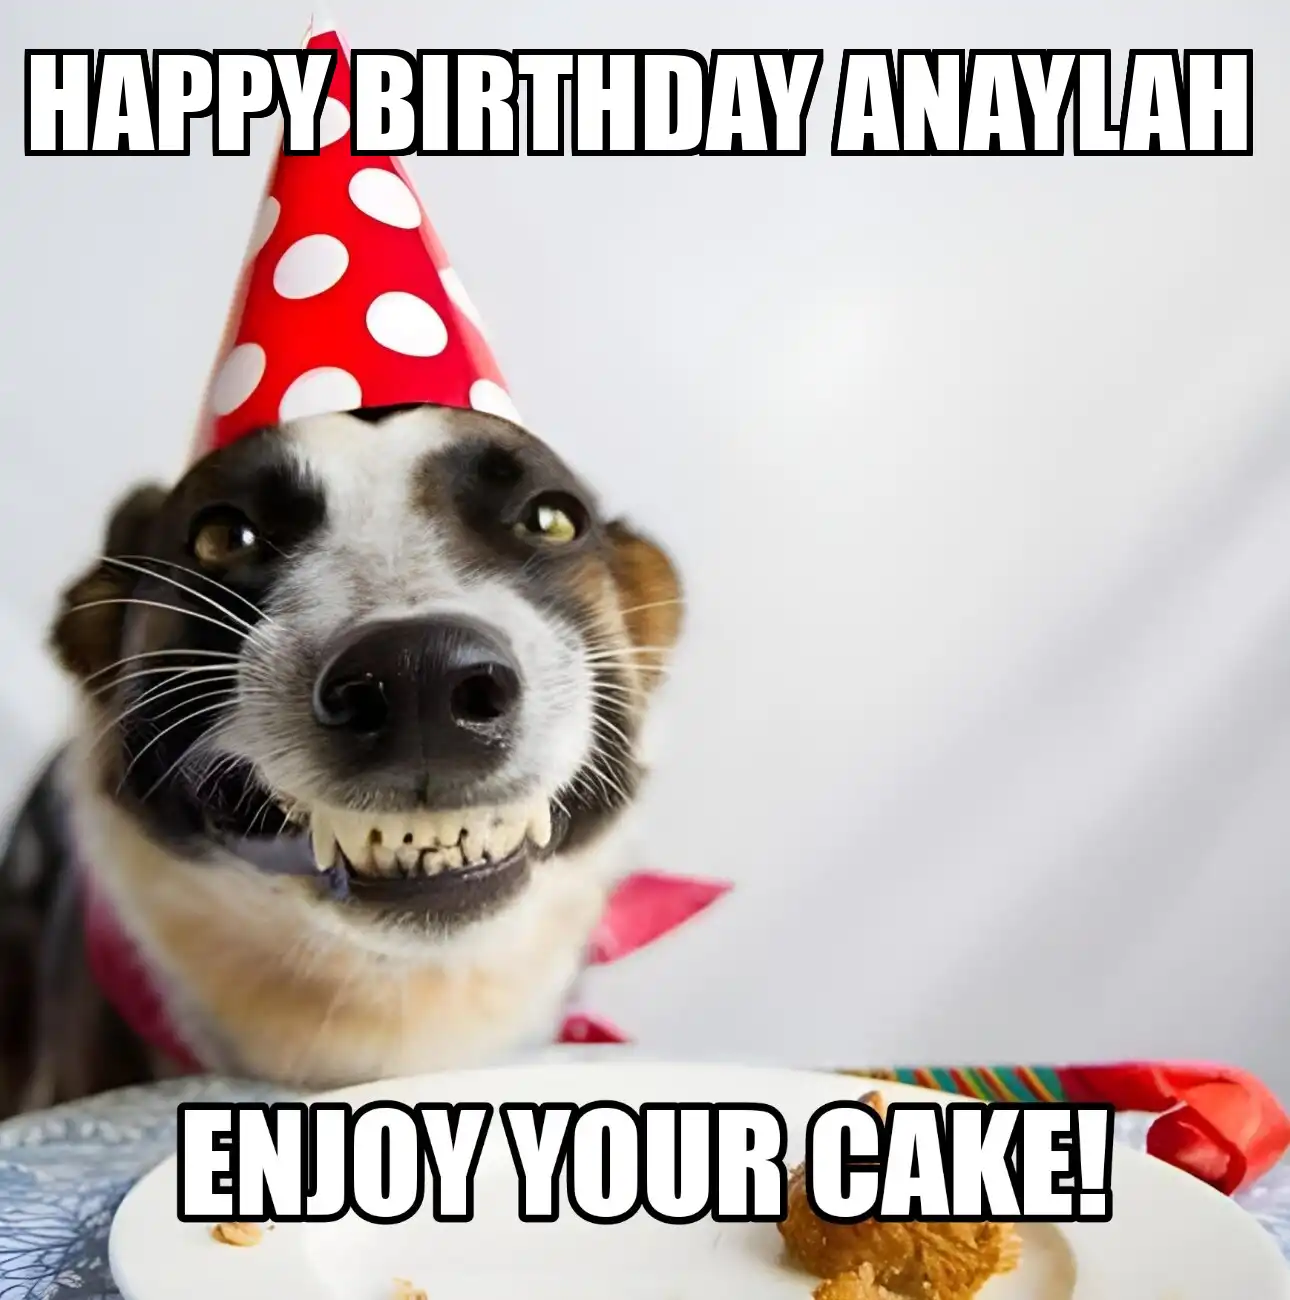 Happy Birthday Anaylah Enjoy Your Cake Dog Meme